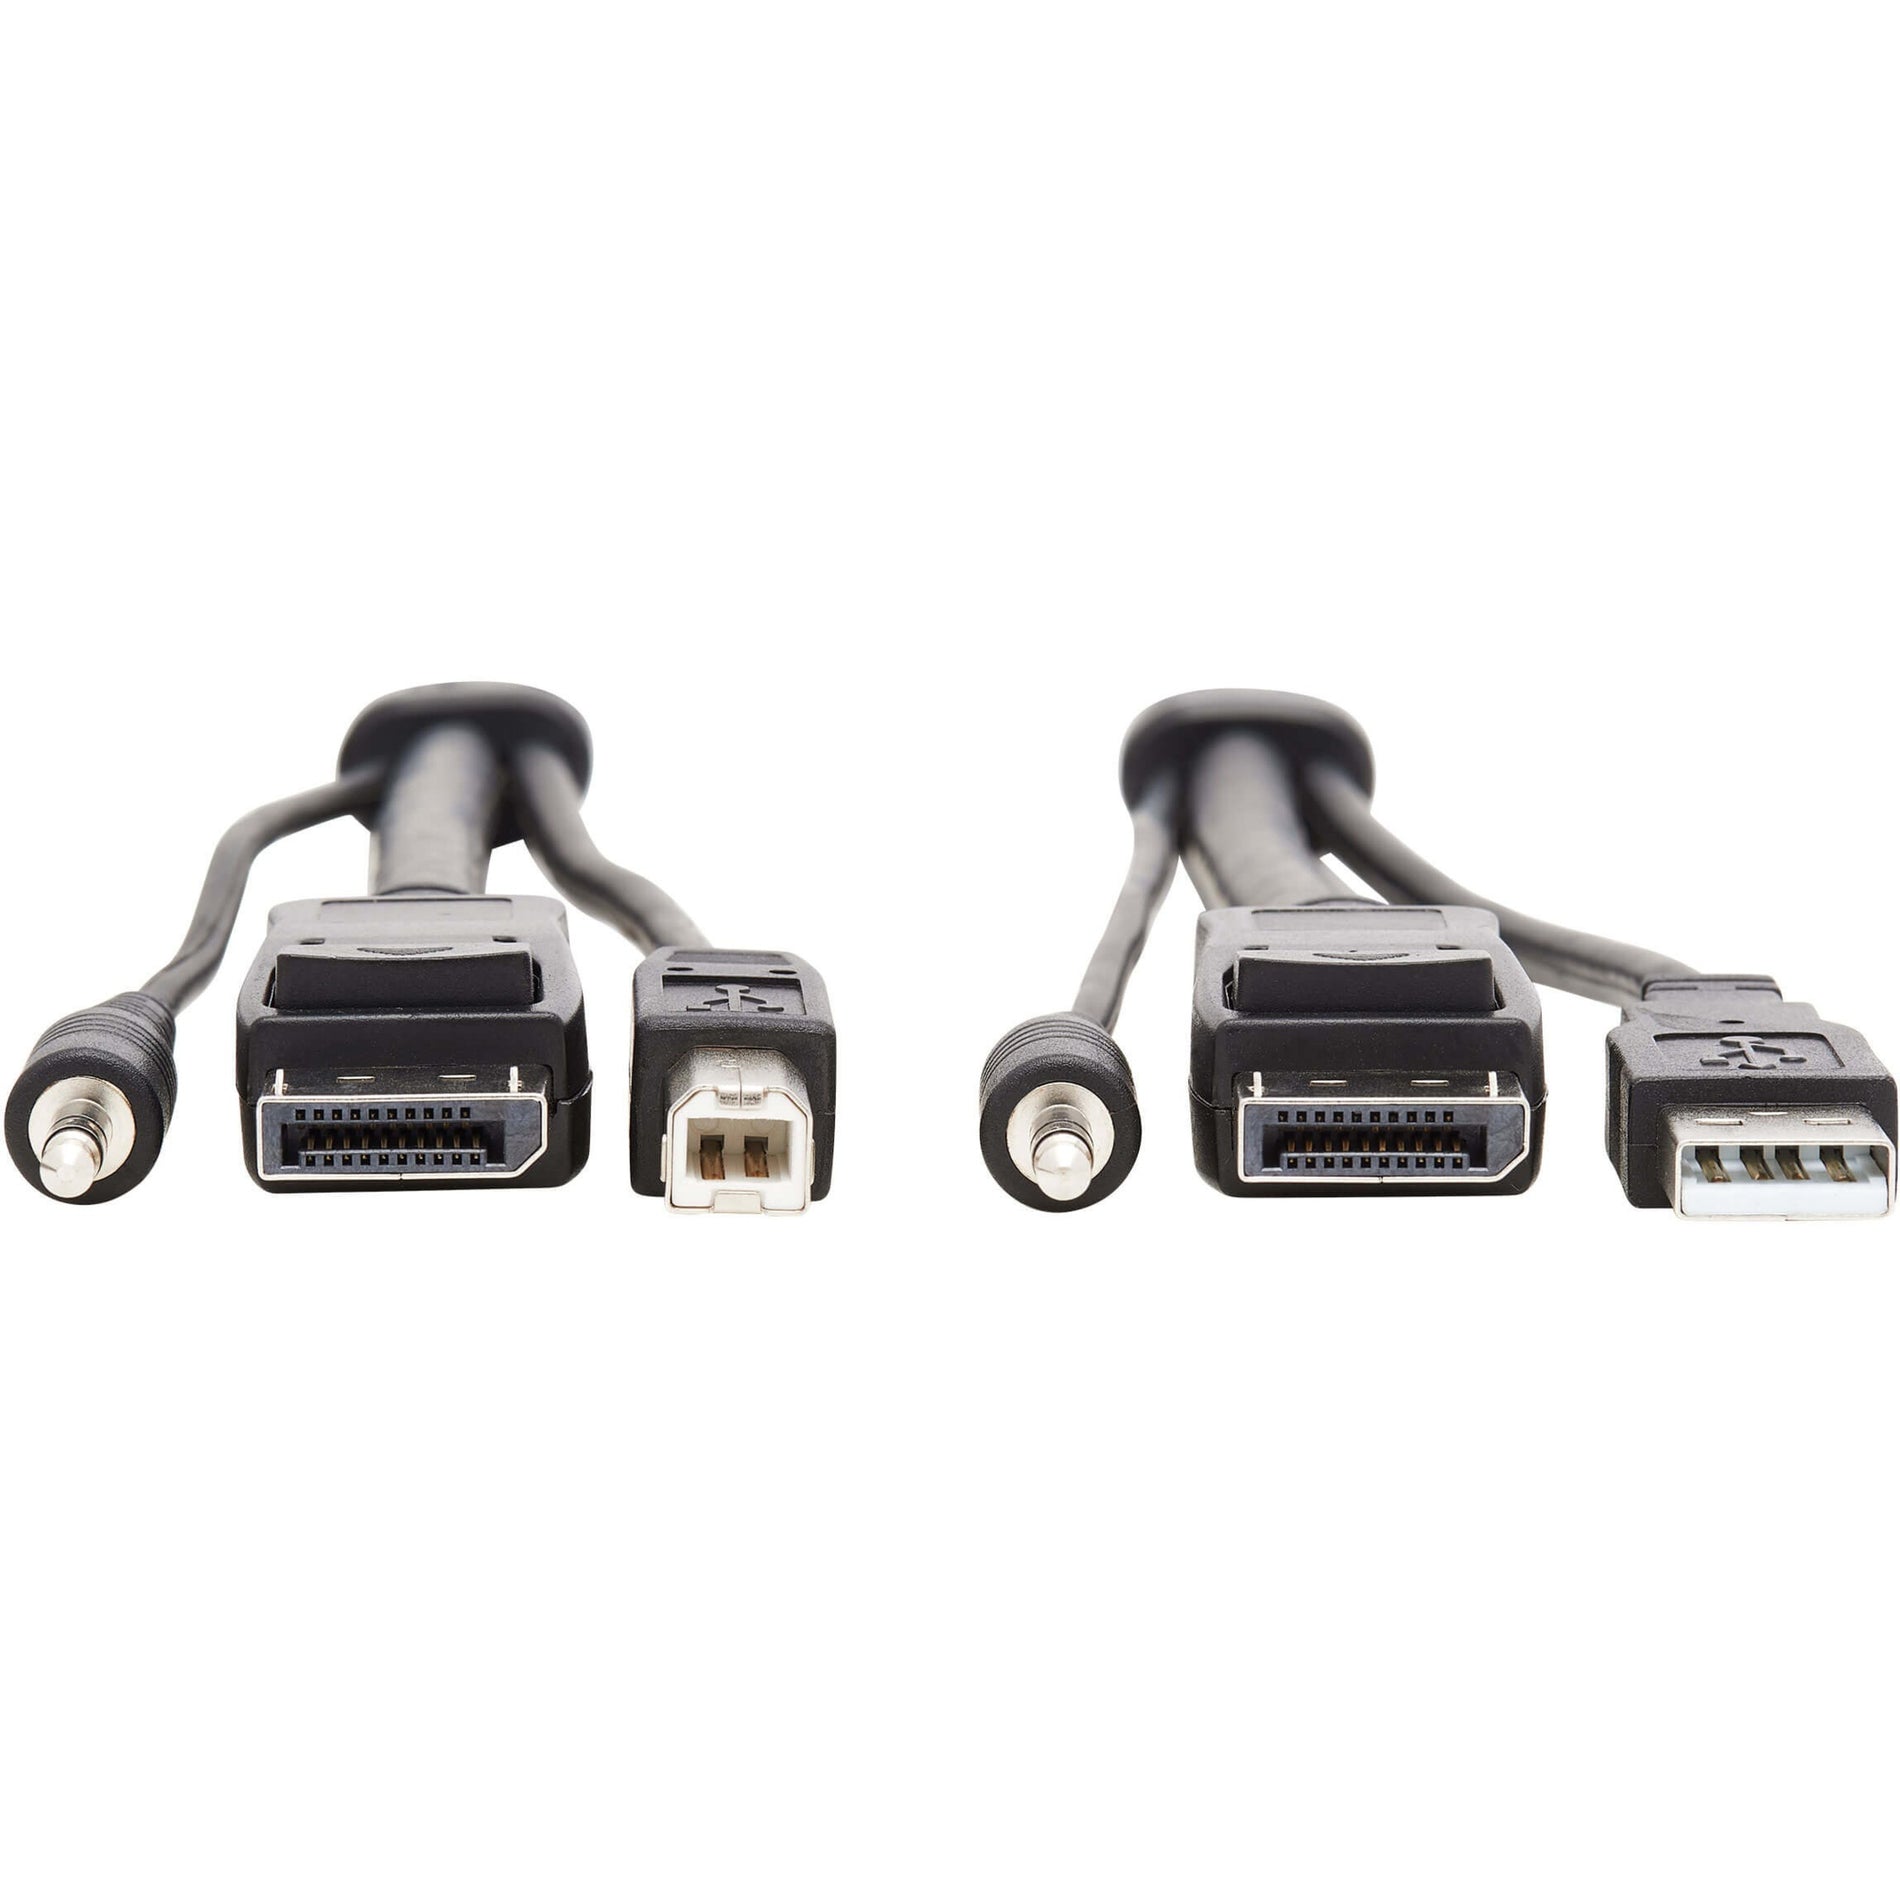 Tripp Lite by Eaton P783-010 KVM Cable, 4K USB 10FT